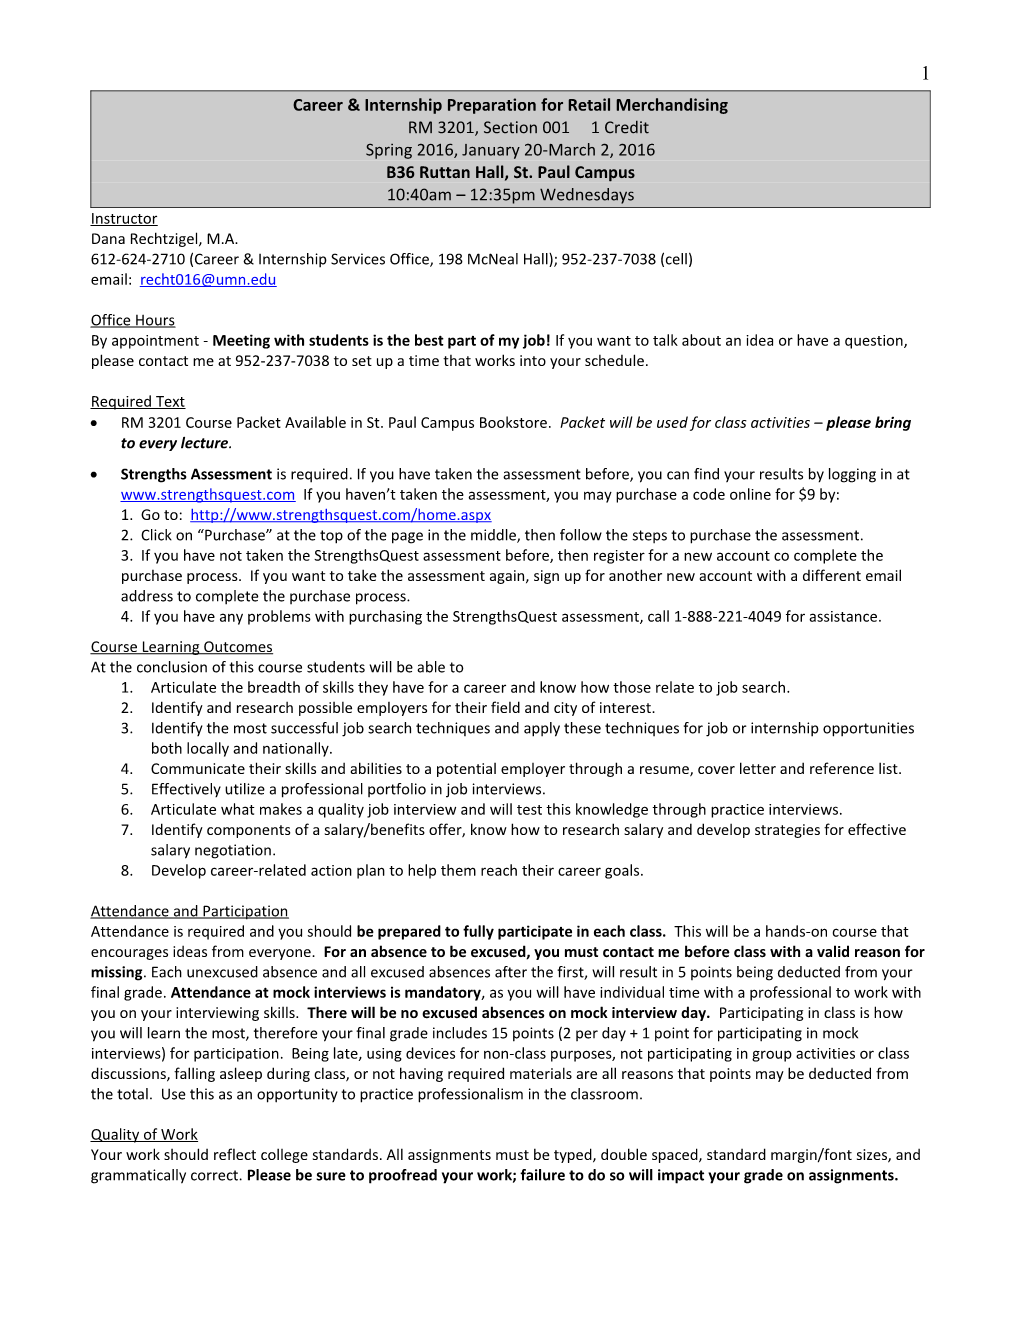 Career & Internship Preparation for Retail Merchandisingrm 3201, Section 001 1 Credit